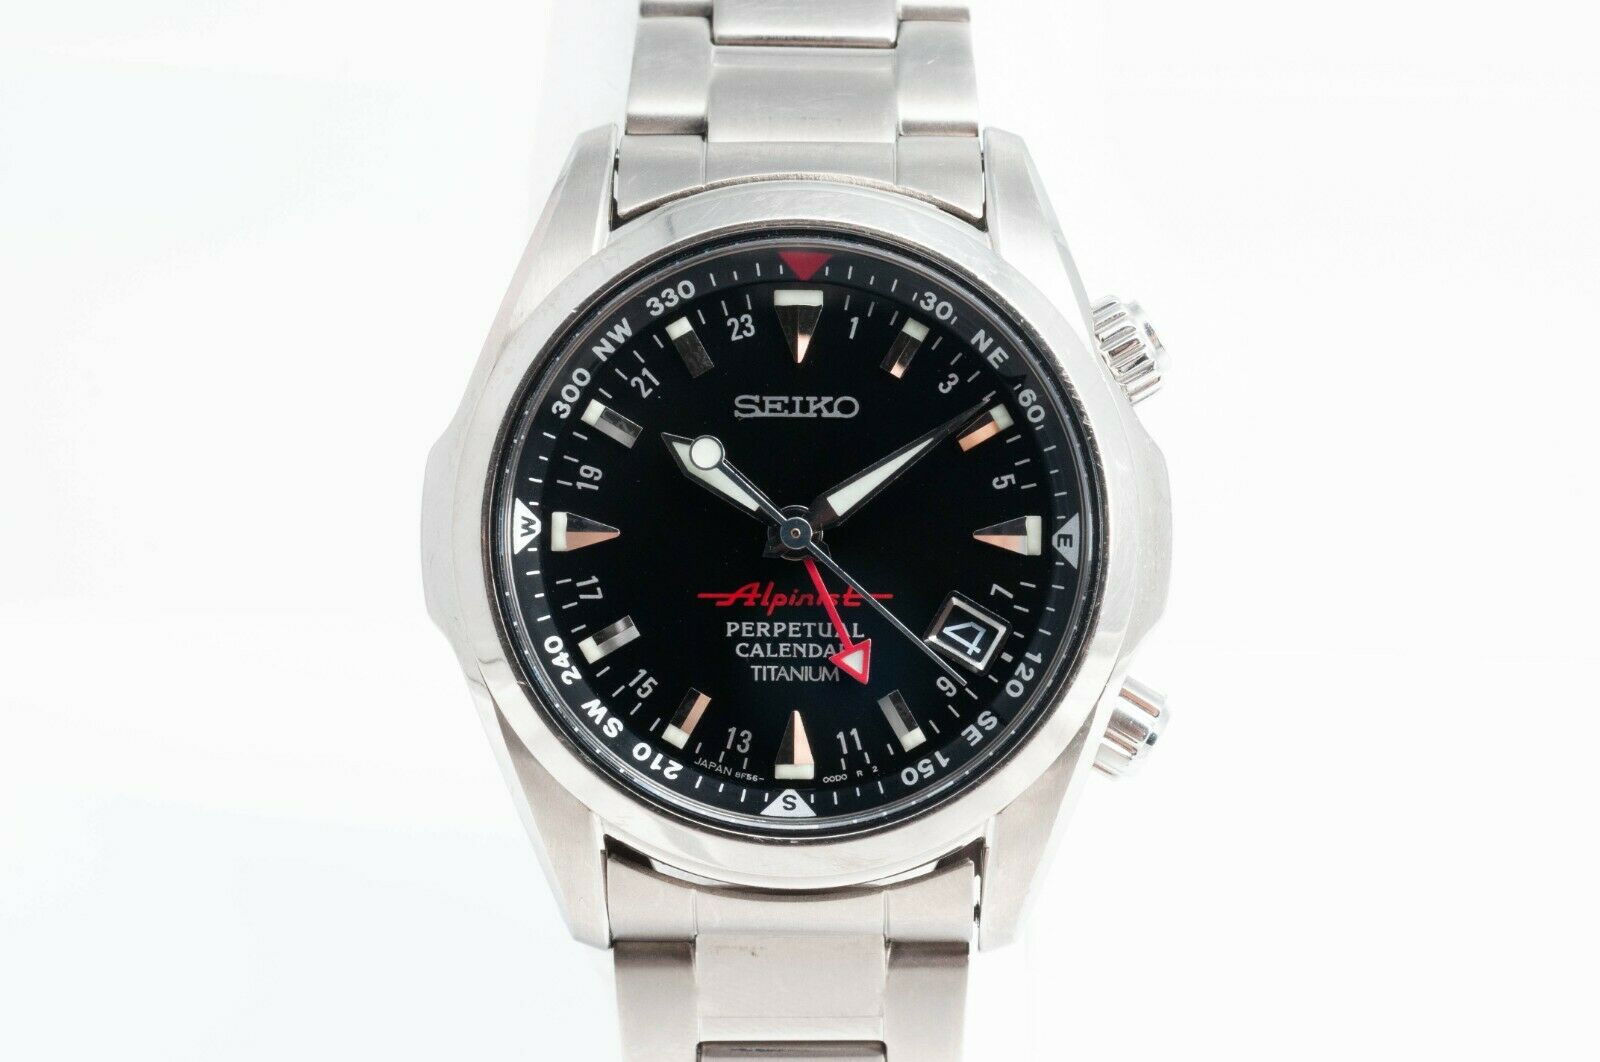 Seiko Prospex Alpinist GMT (SBCJ019) Market Price | WatchCharts